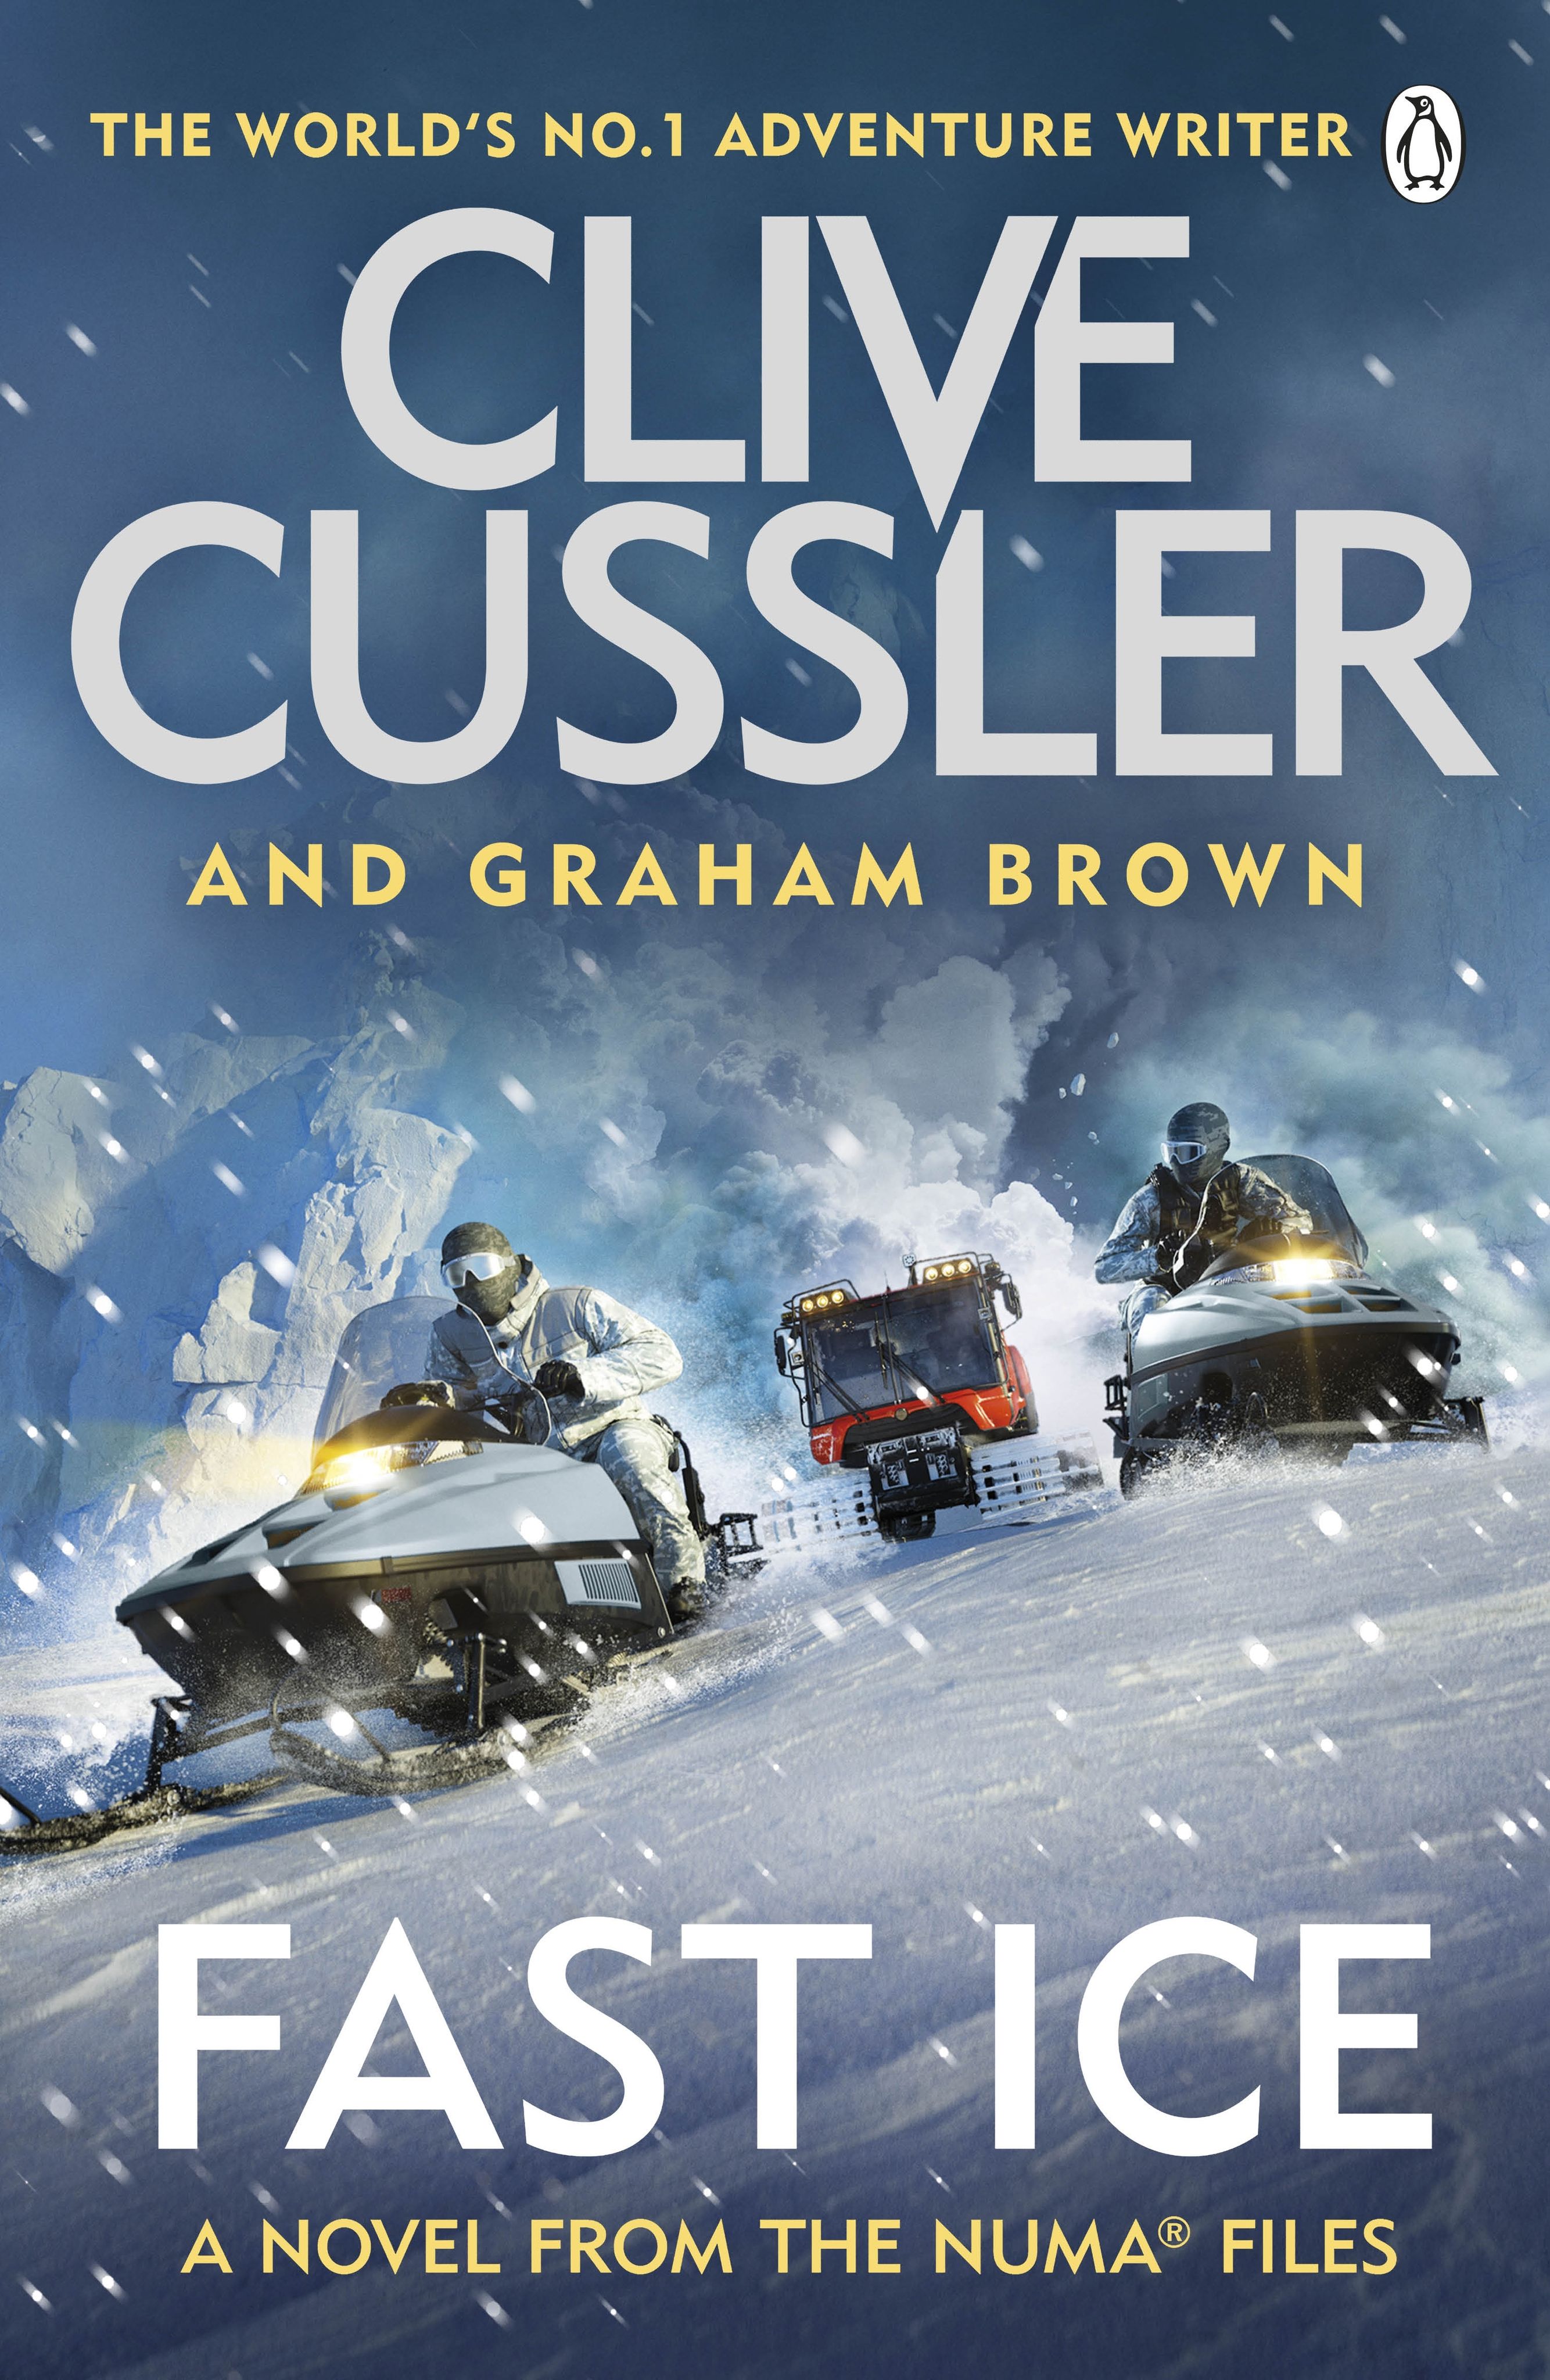 Fast ice. Ice обложка. Ice fastness. Adventure Clive Dorris оригинал. Cussler Clive "the Striker".